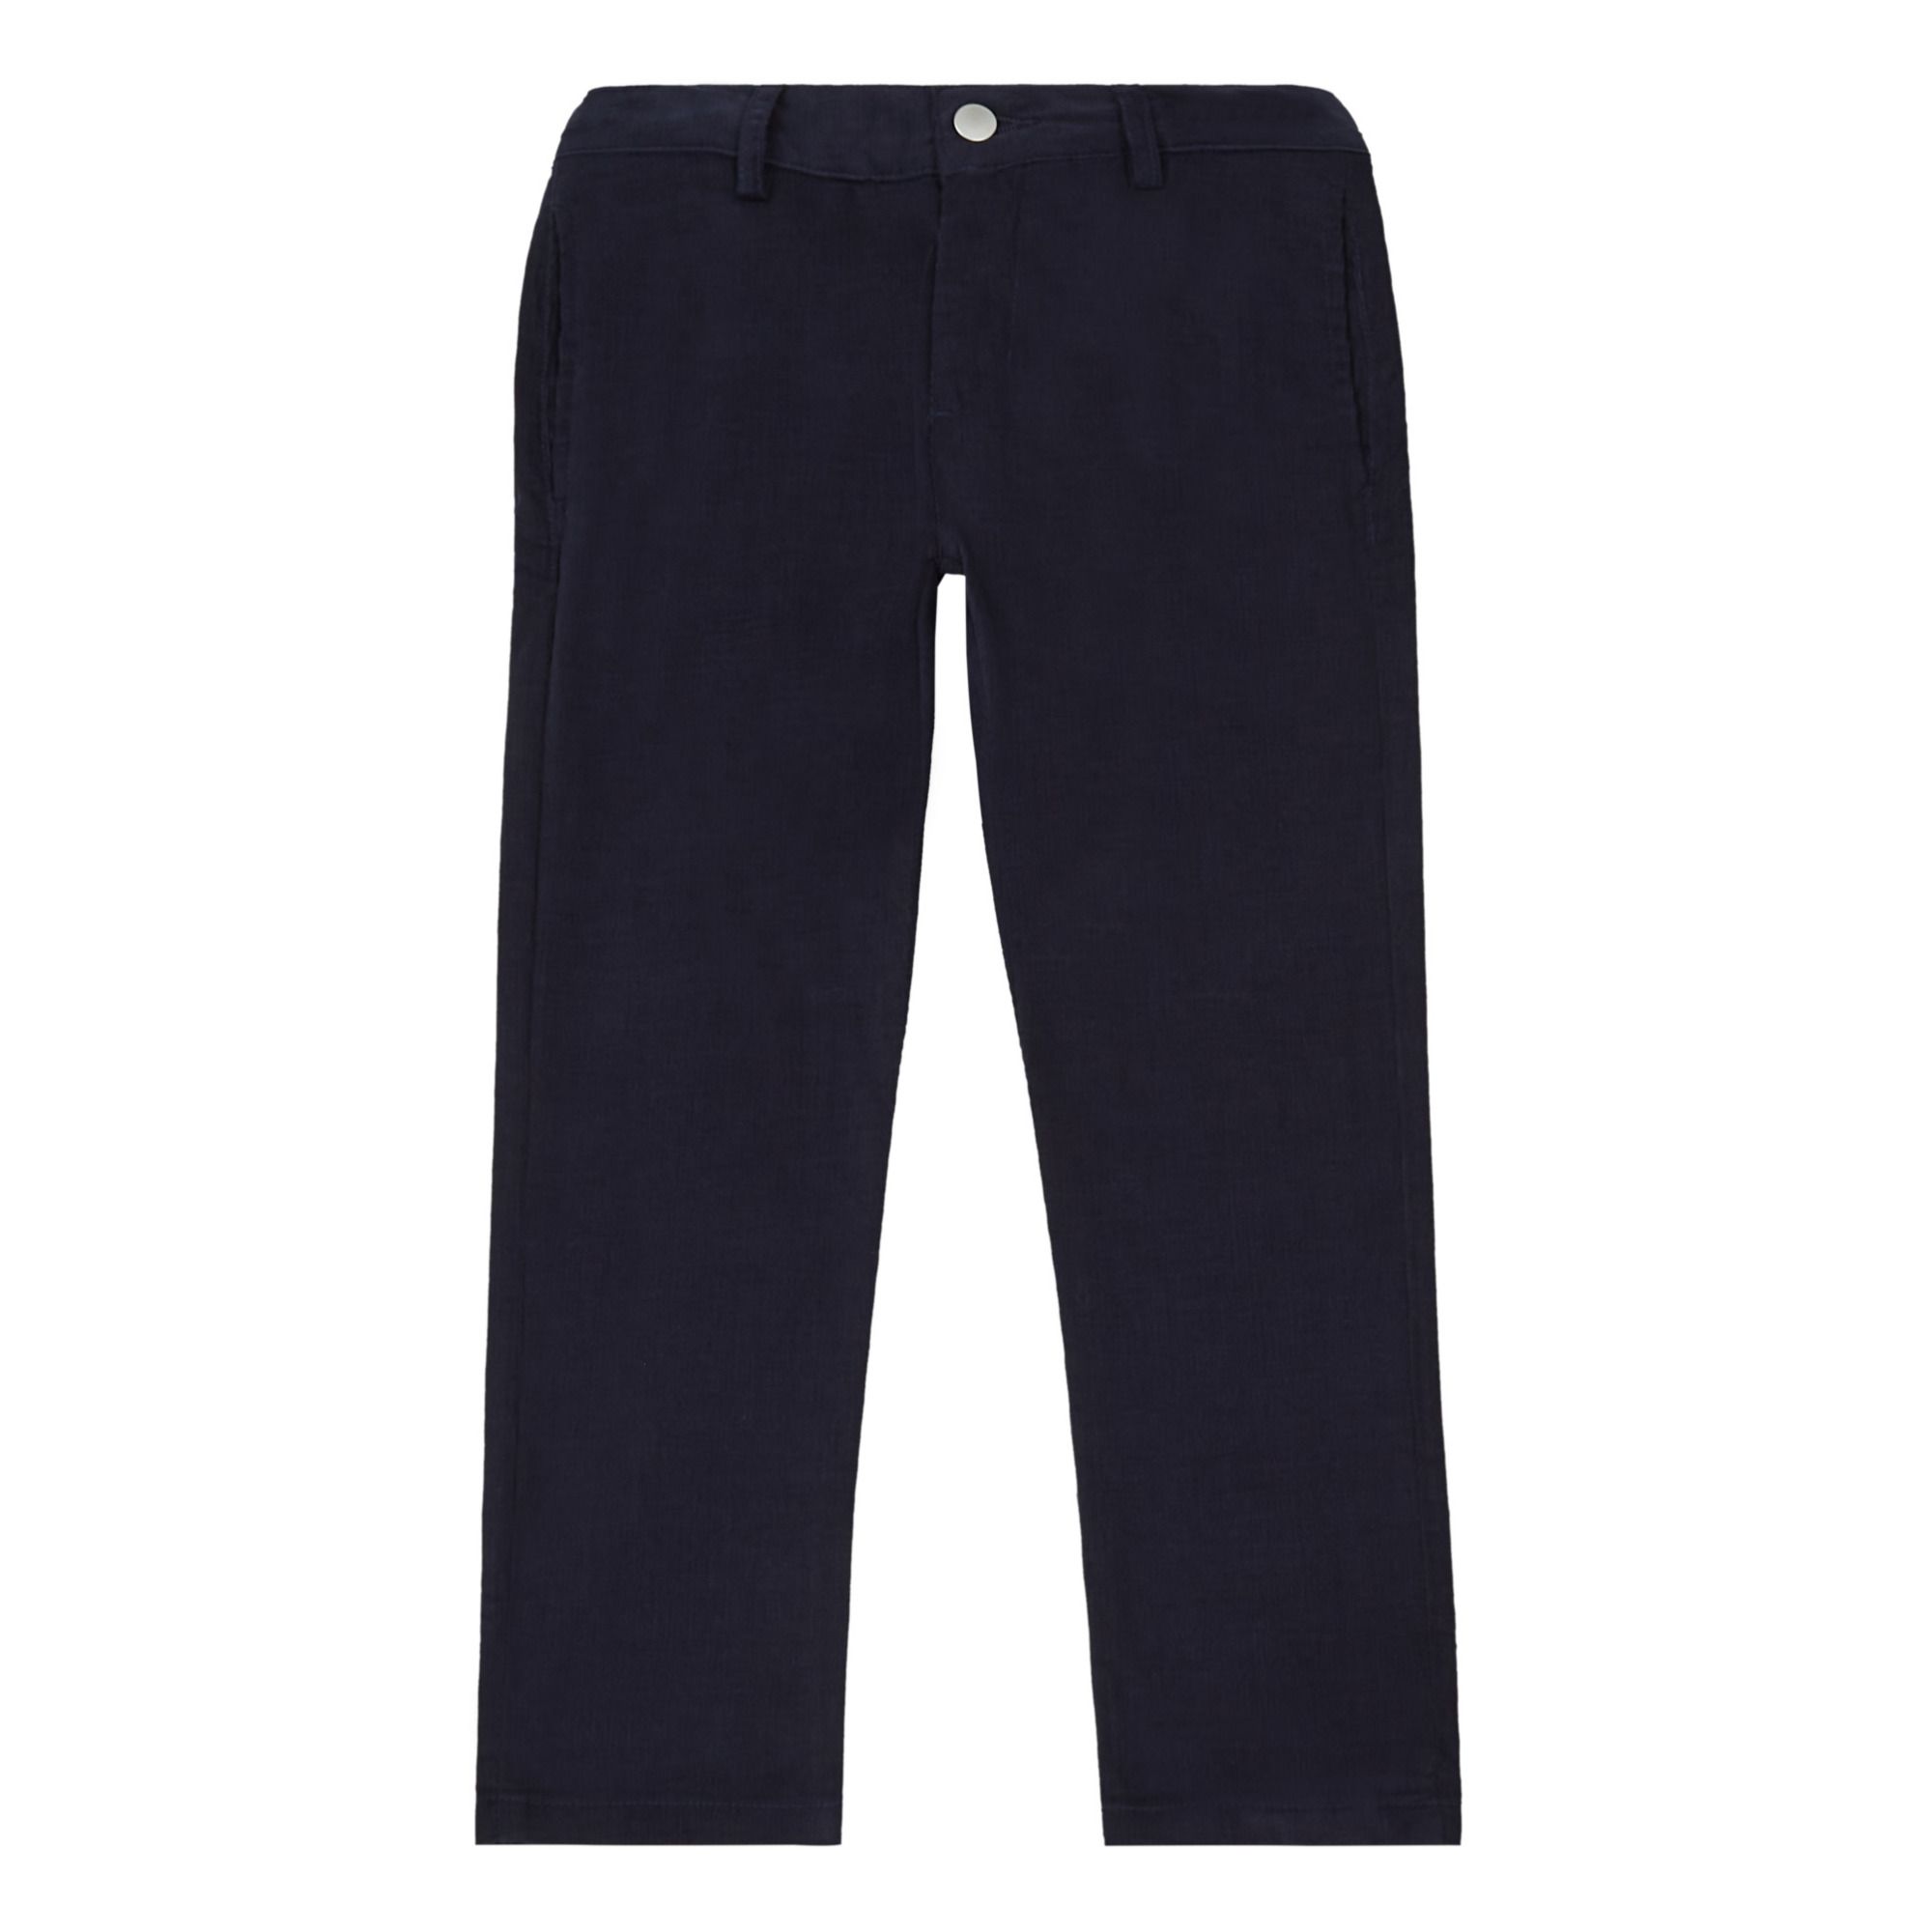 La Petite Collection - Pantalon Velours Coton Bio Retro - Fille - Bleu marine